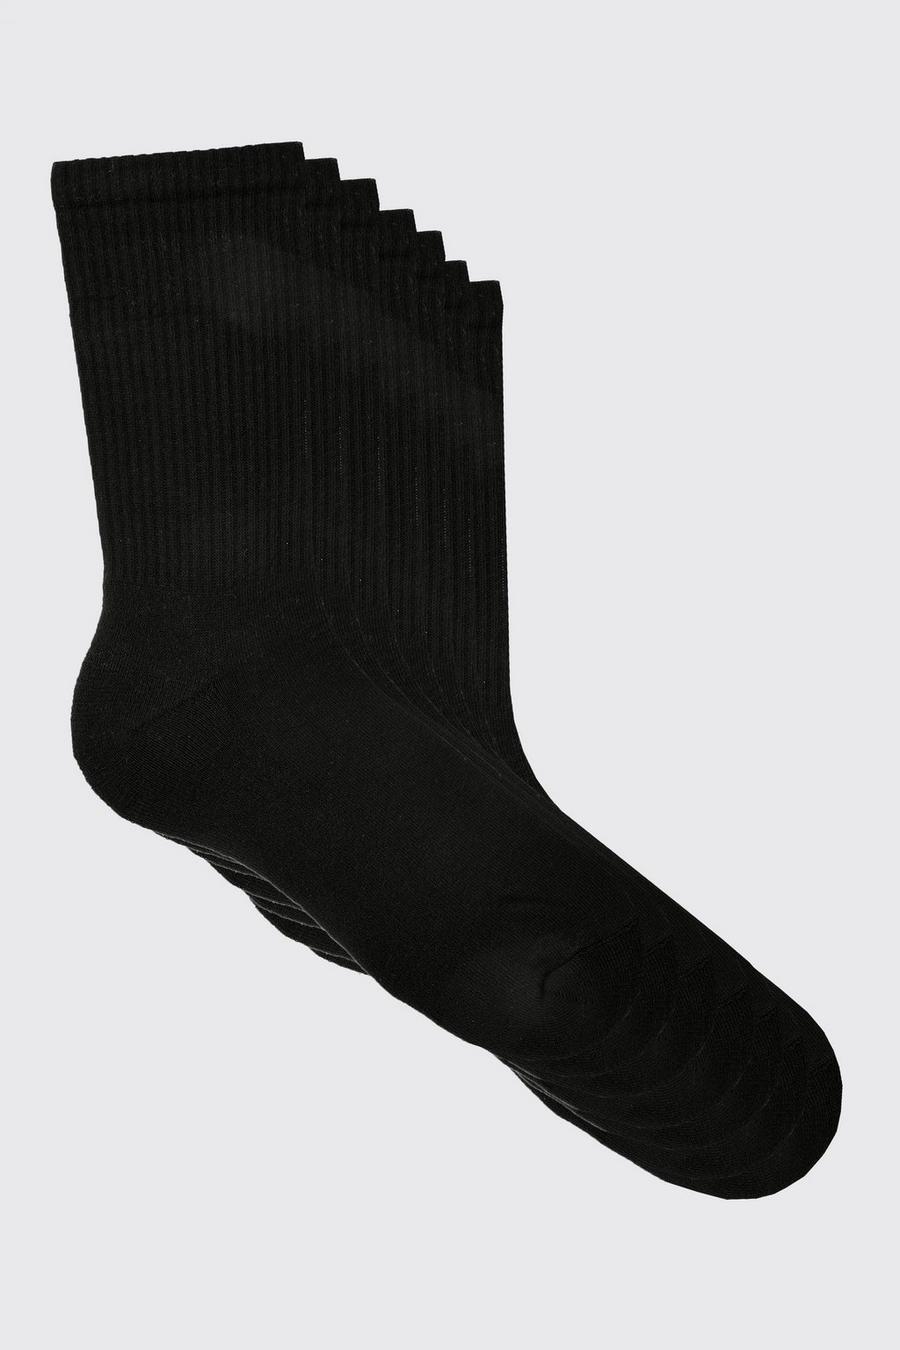 Pack de 7 pares de calcetines deportivos lisos, Black